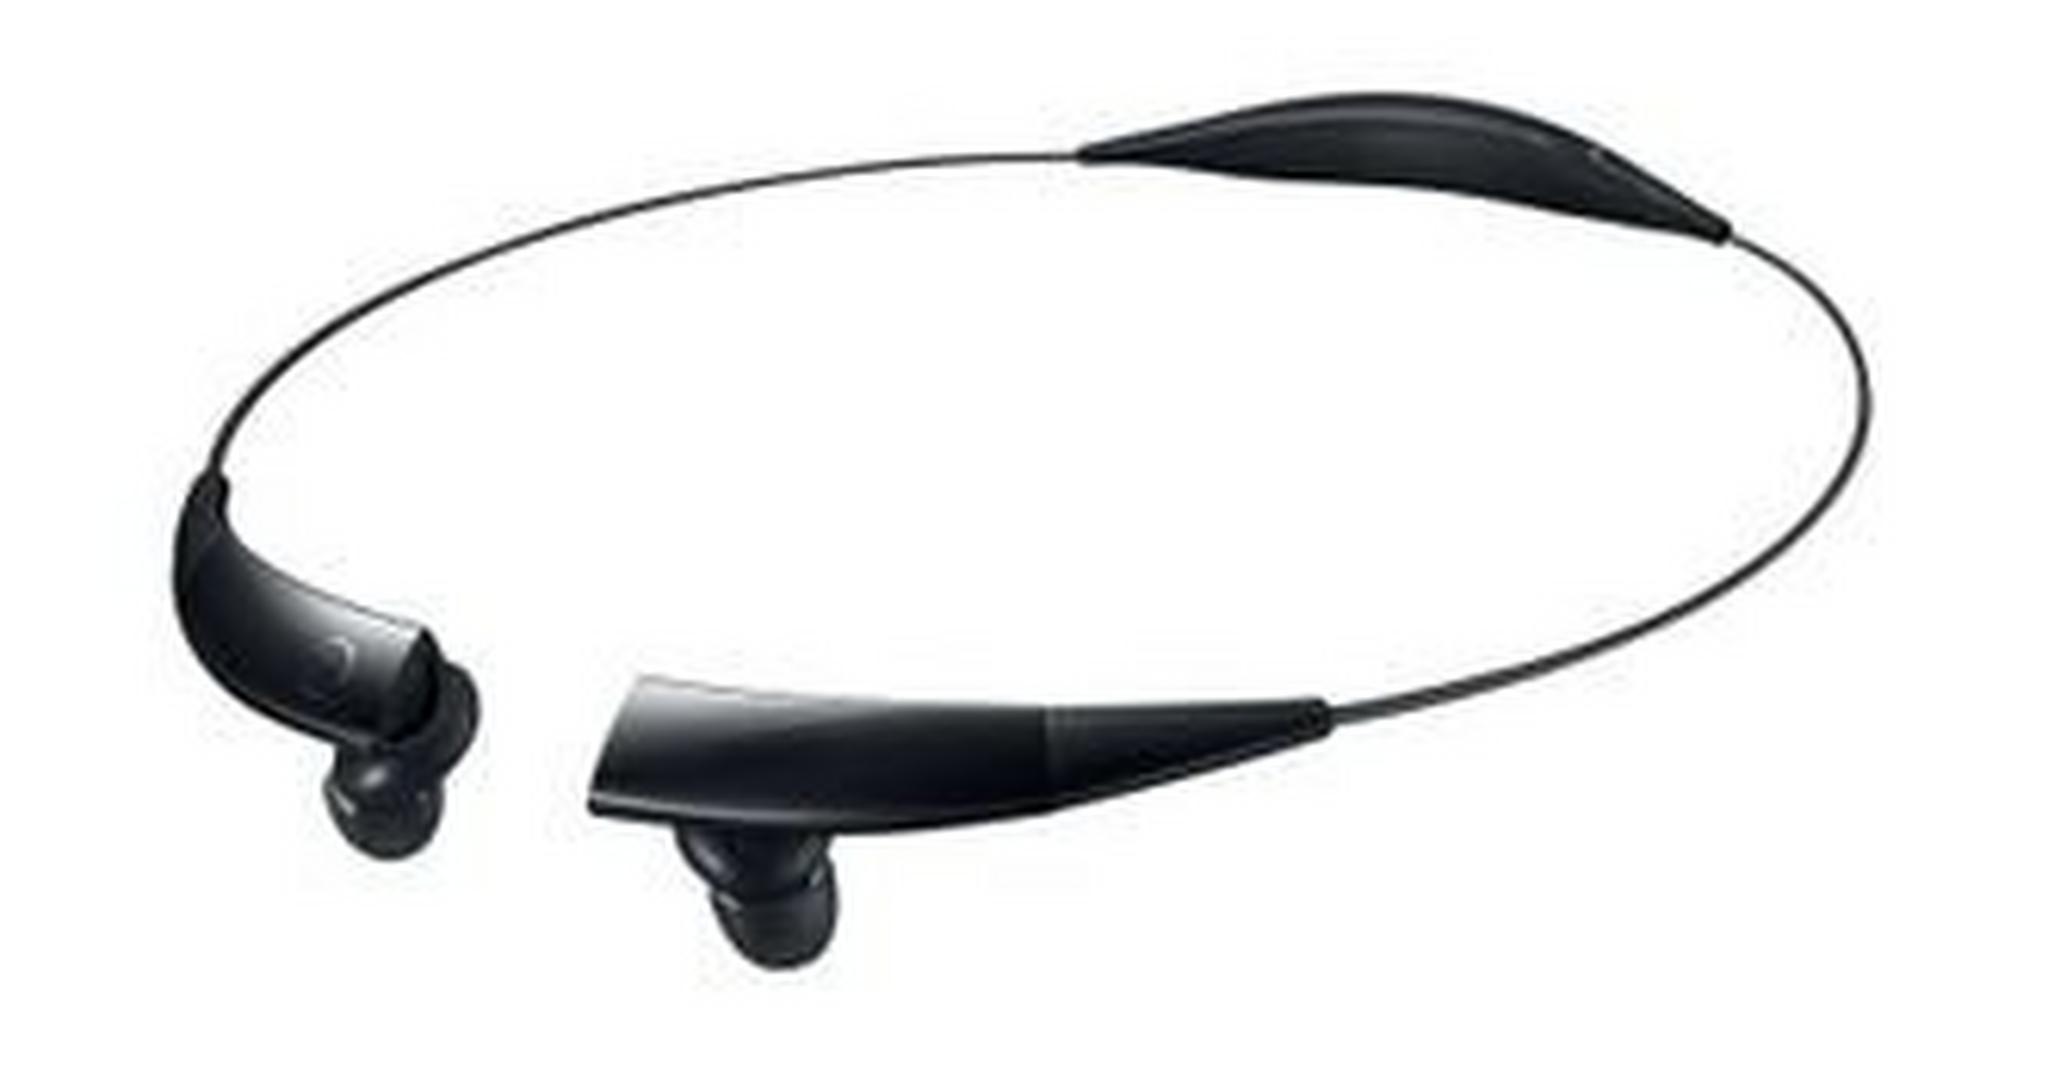 Samsung Gear Circle Wireless Earphone - Black